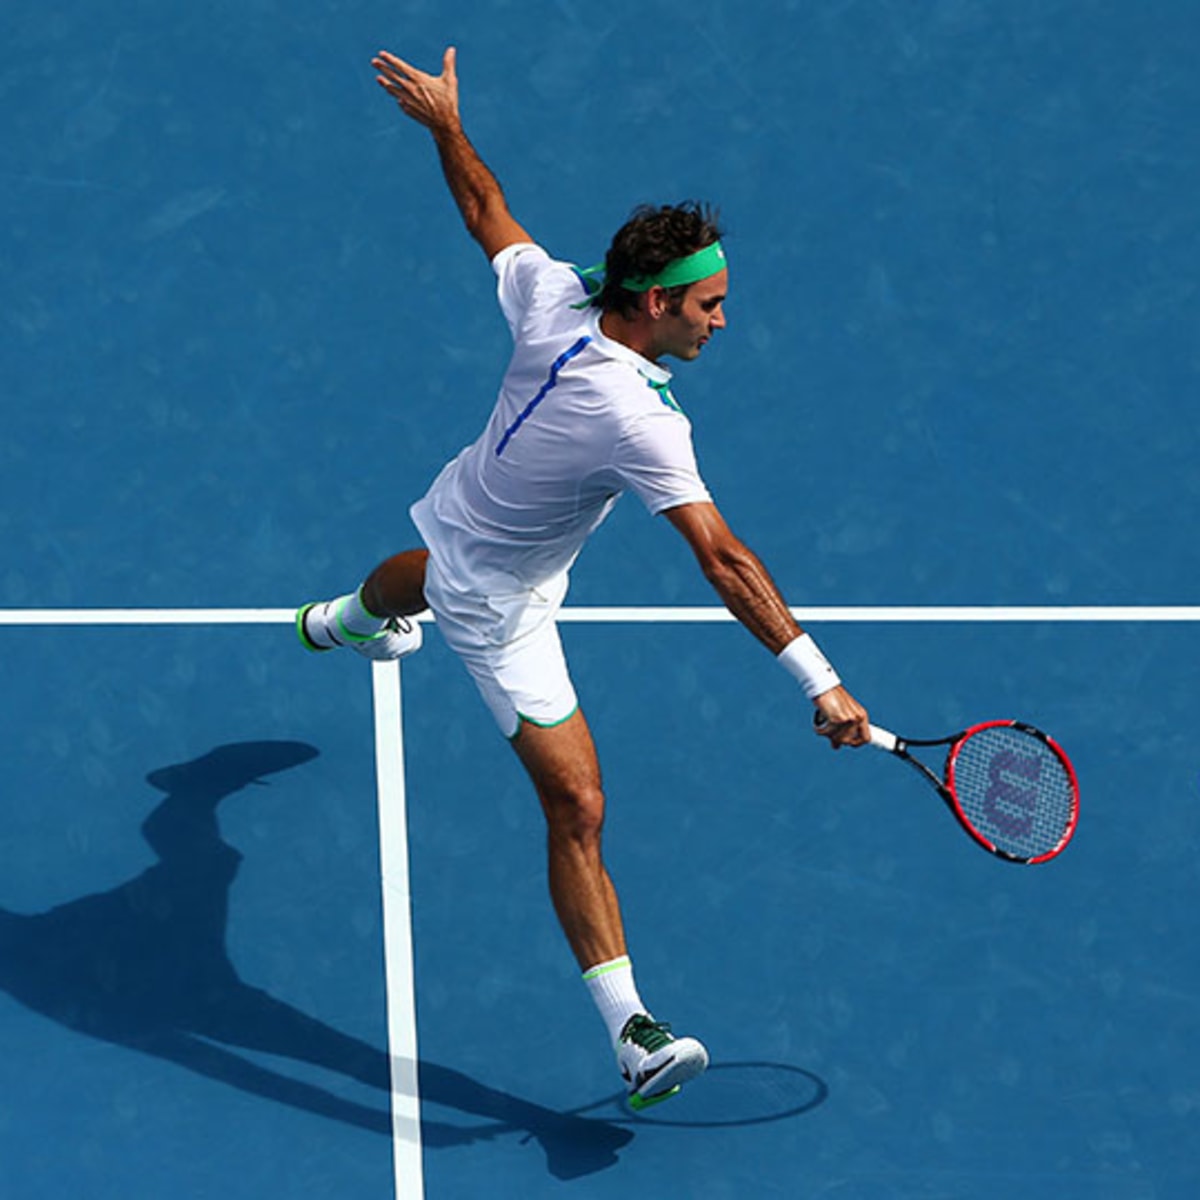 В теннисной спортивной. Бэкхенд Роджер Федерер. Roger Federer backhand. Backhand shot теннис. Федерер Роджер удар слева.